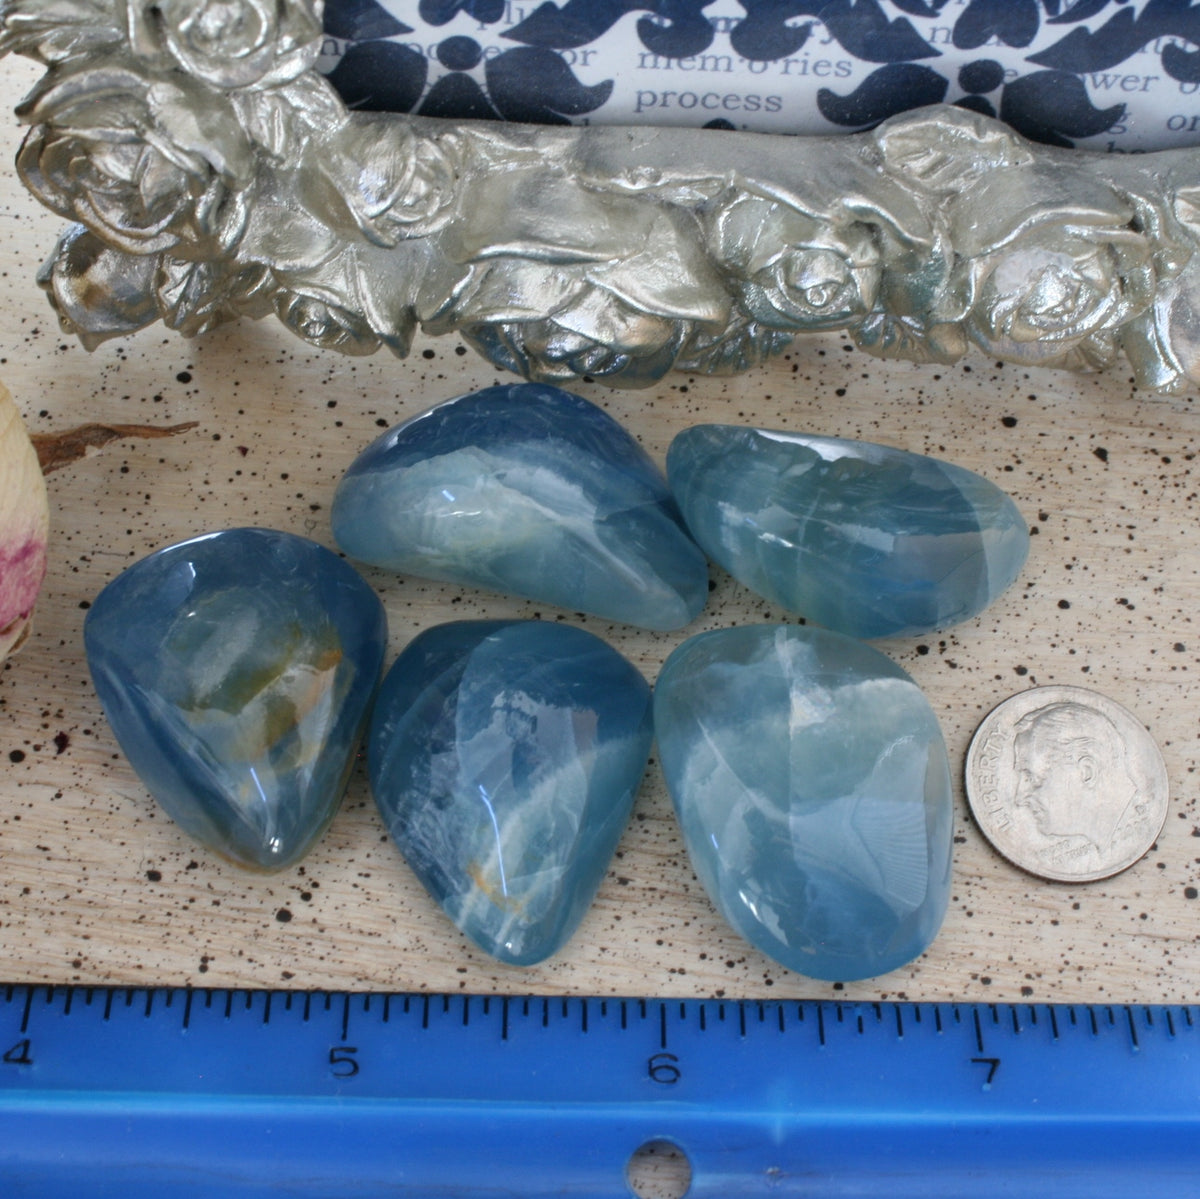 Blue Calcite / Blue Onyx Tumbled Stone from Argentina, also called Lemurian Aquatine Calcite, TUM16